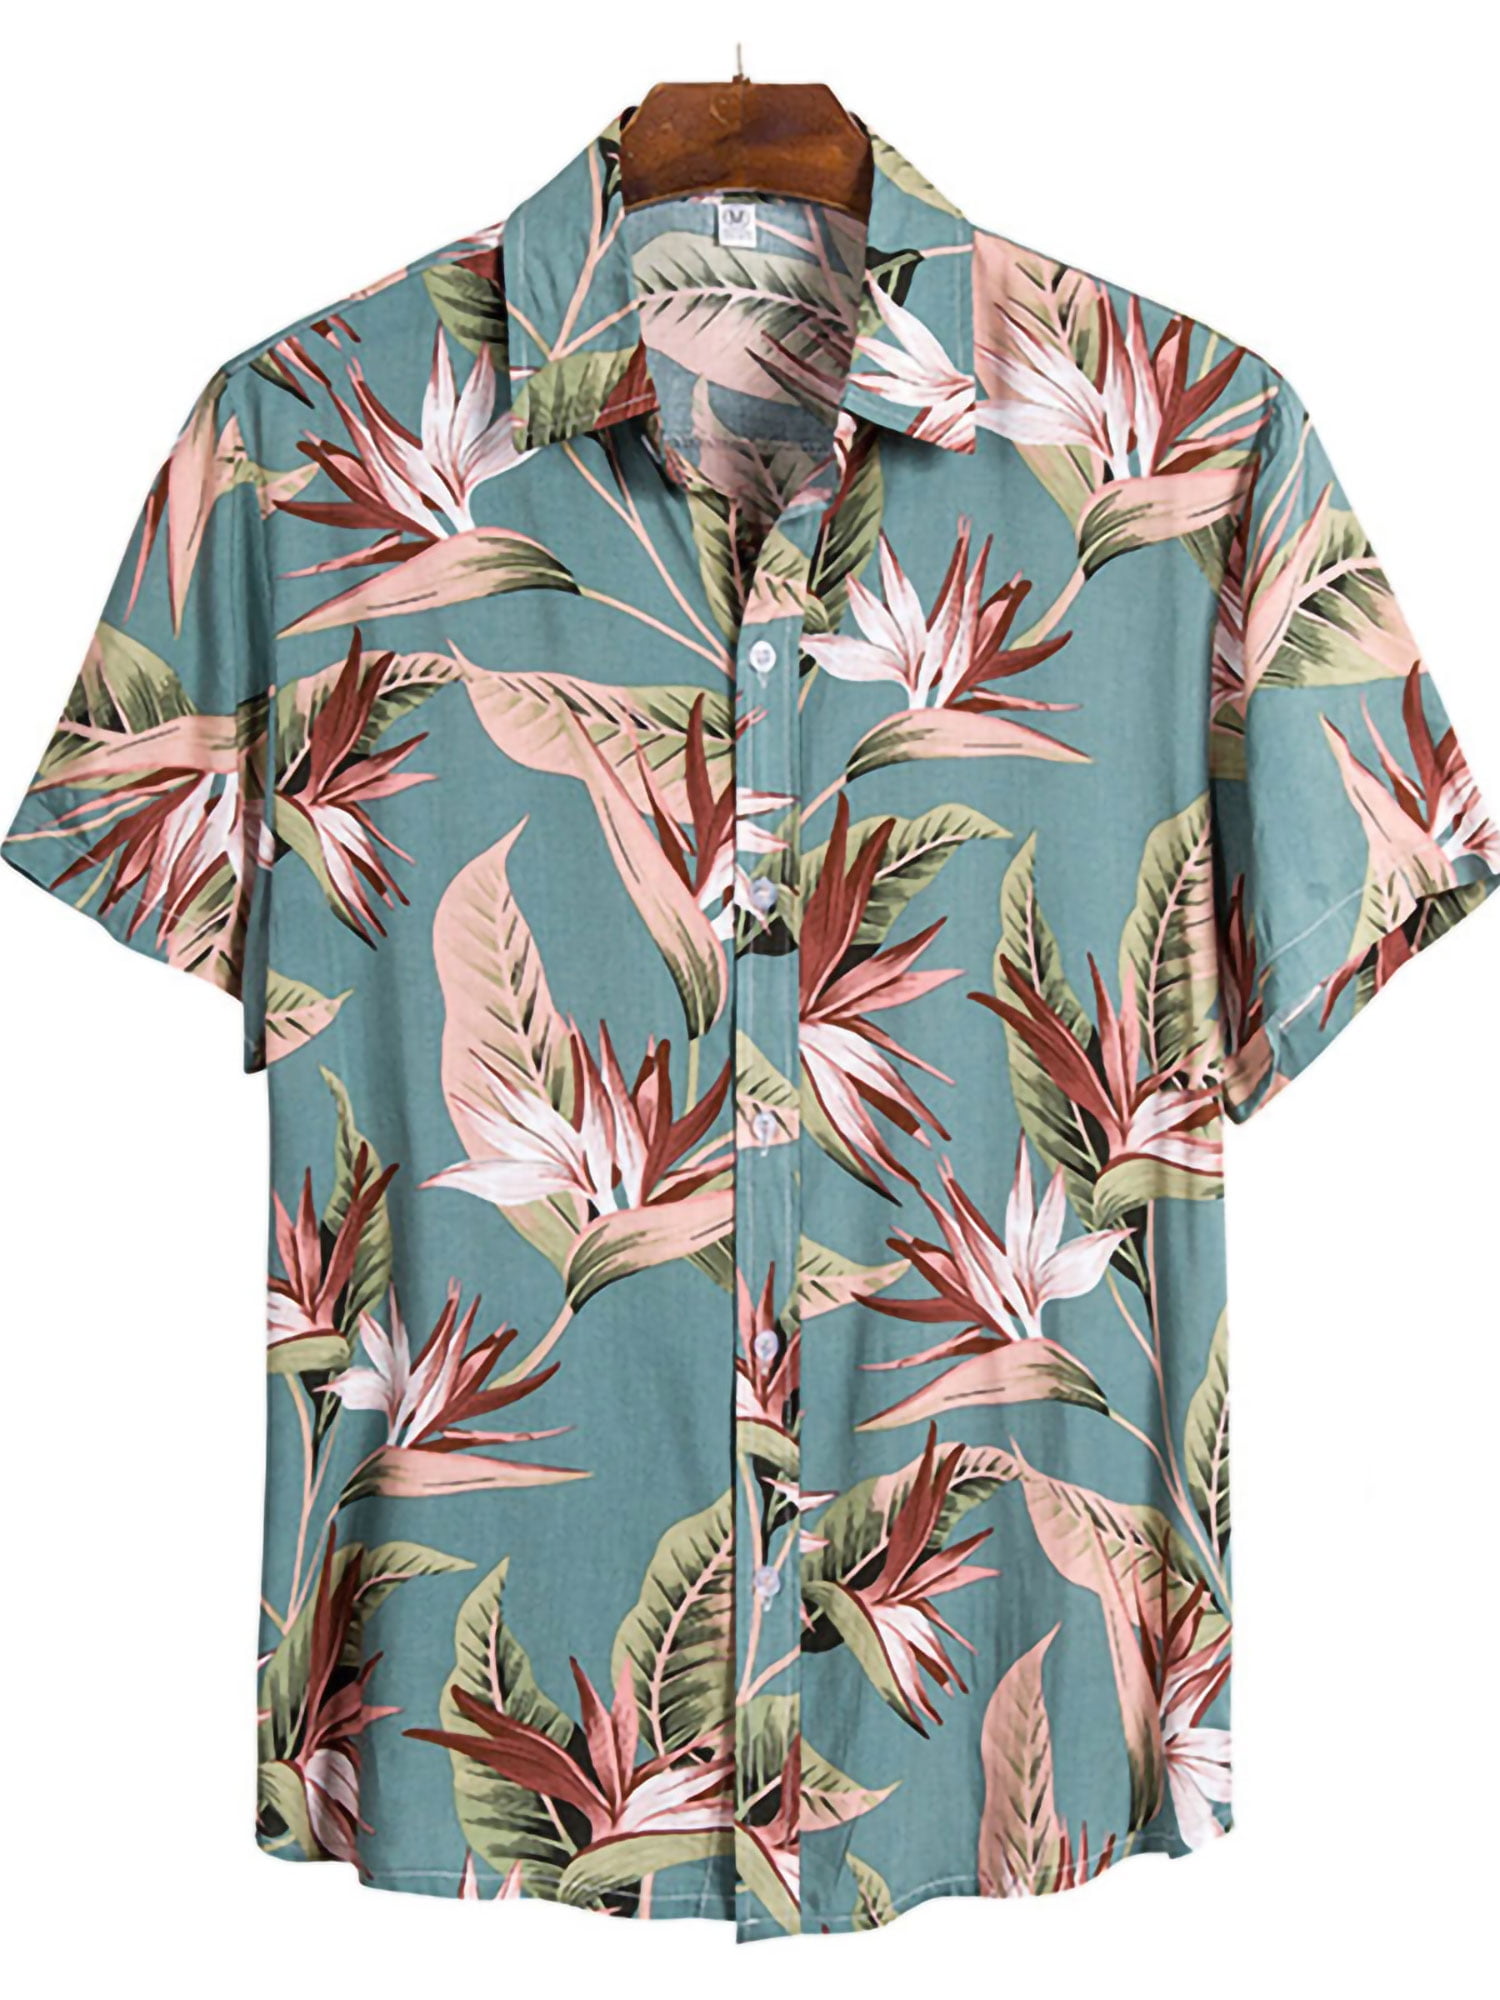 Mens Tee T Shirt S M L XL XXL Bahama Beach Hawaiian Surf Island Aloha Palm NEW 